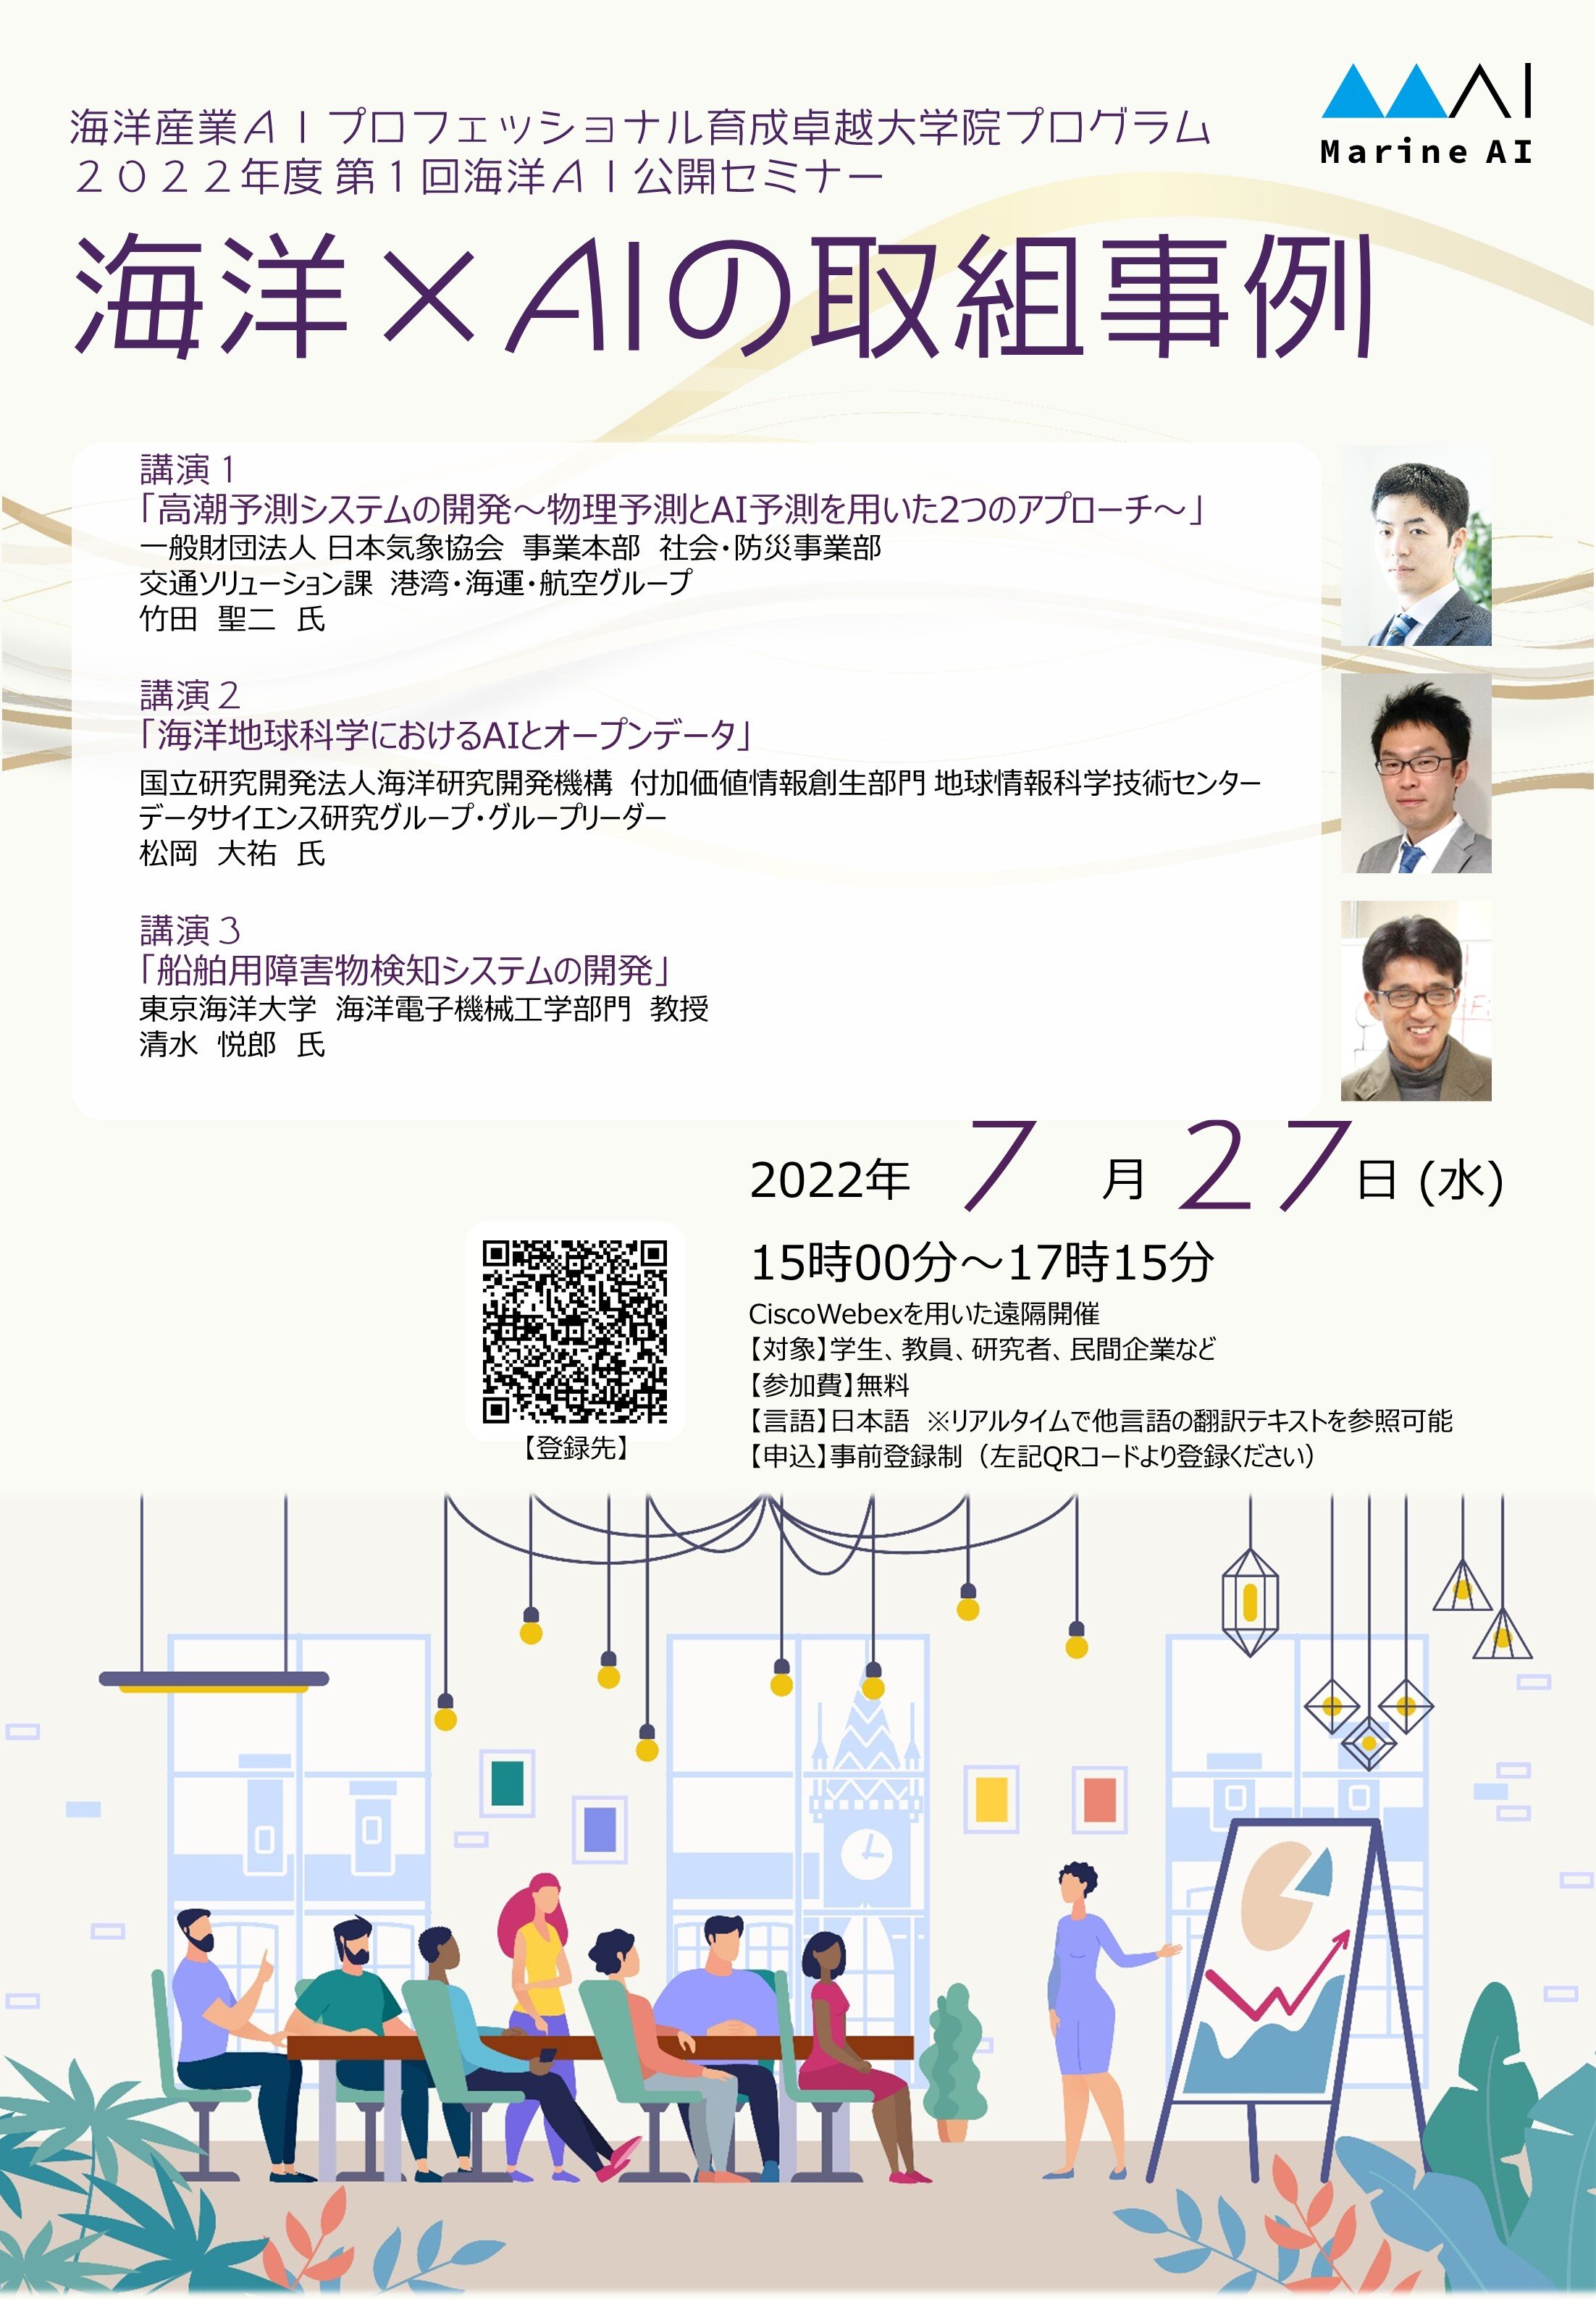 https://www.g2.kaiyodai.ac.jp/marine-ai/eng/news/img/news/slide1.JPG